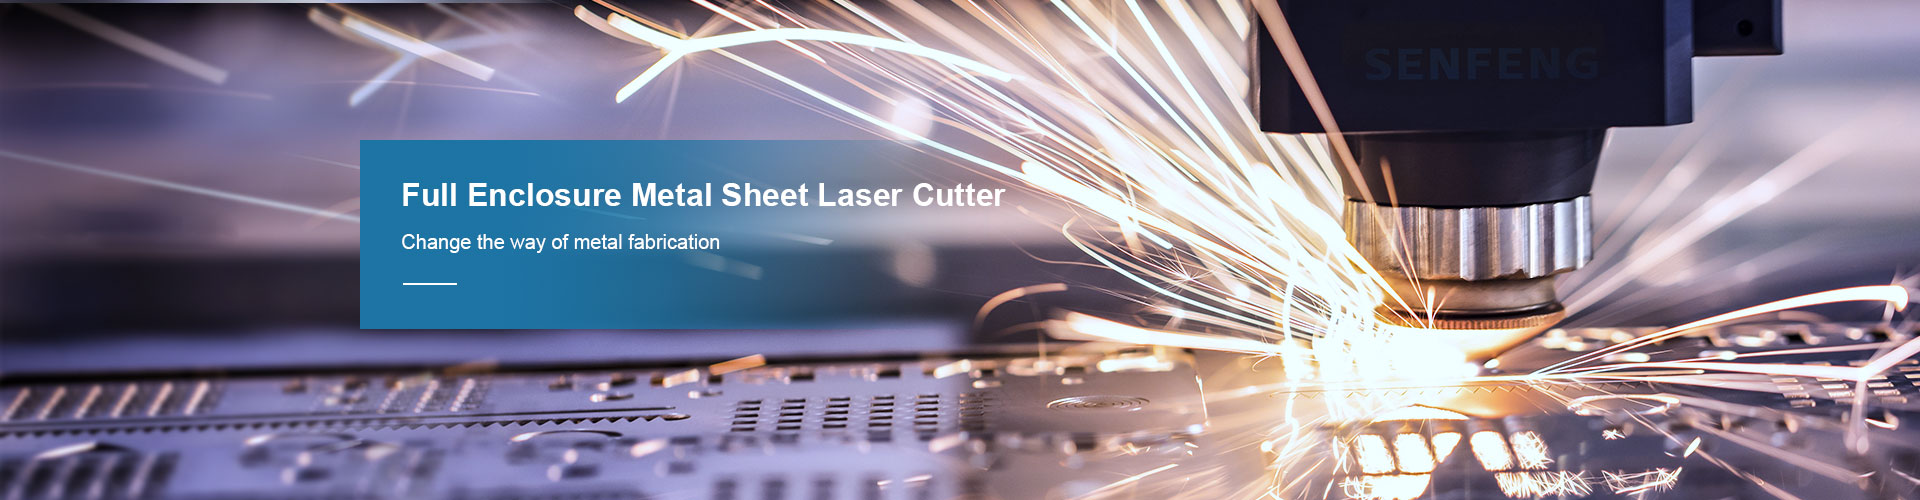 Full Enclosure Metal Sheet Laser Cutter